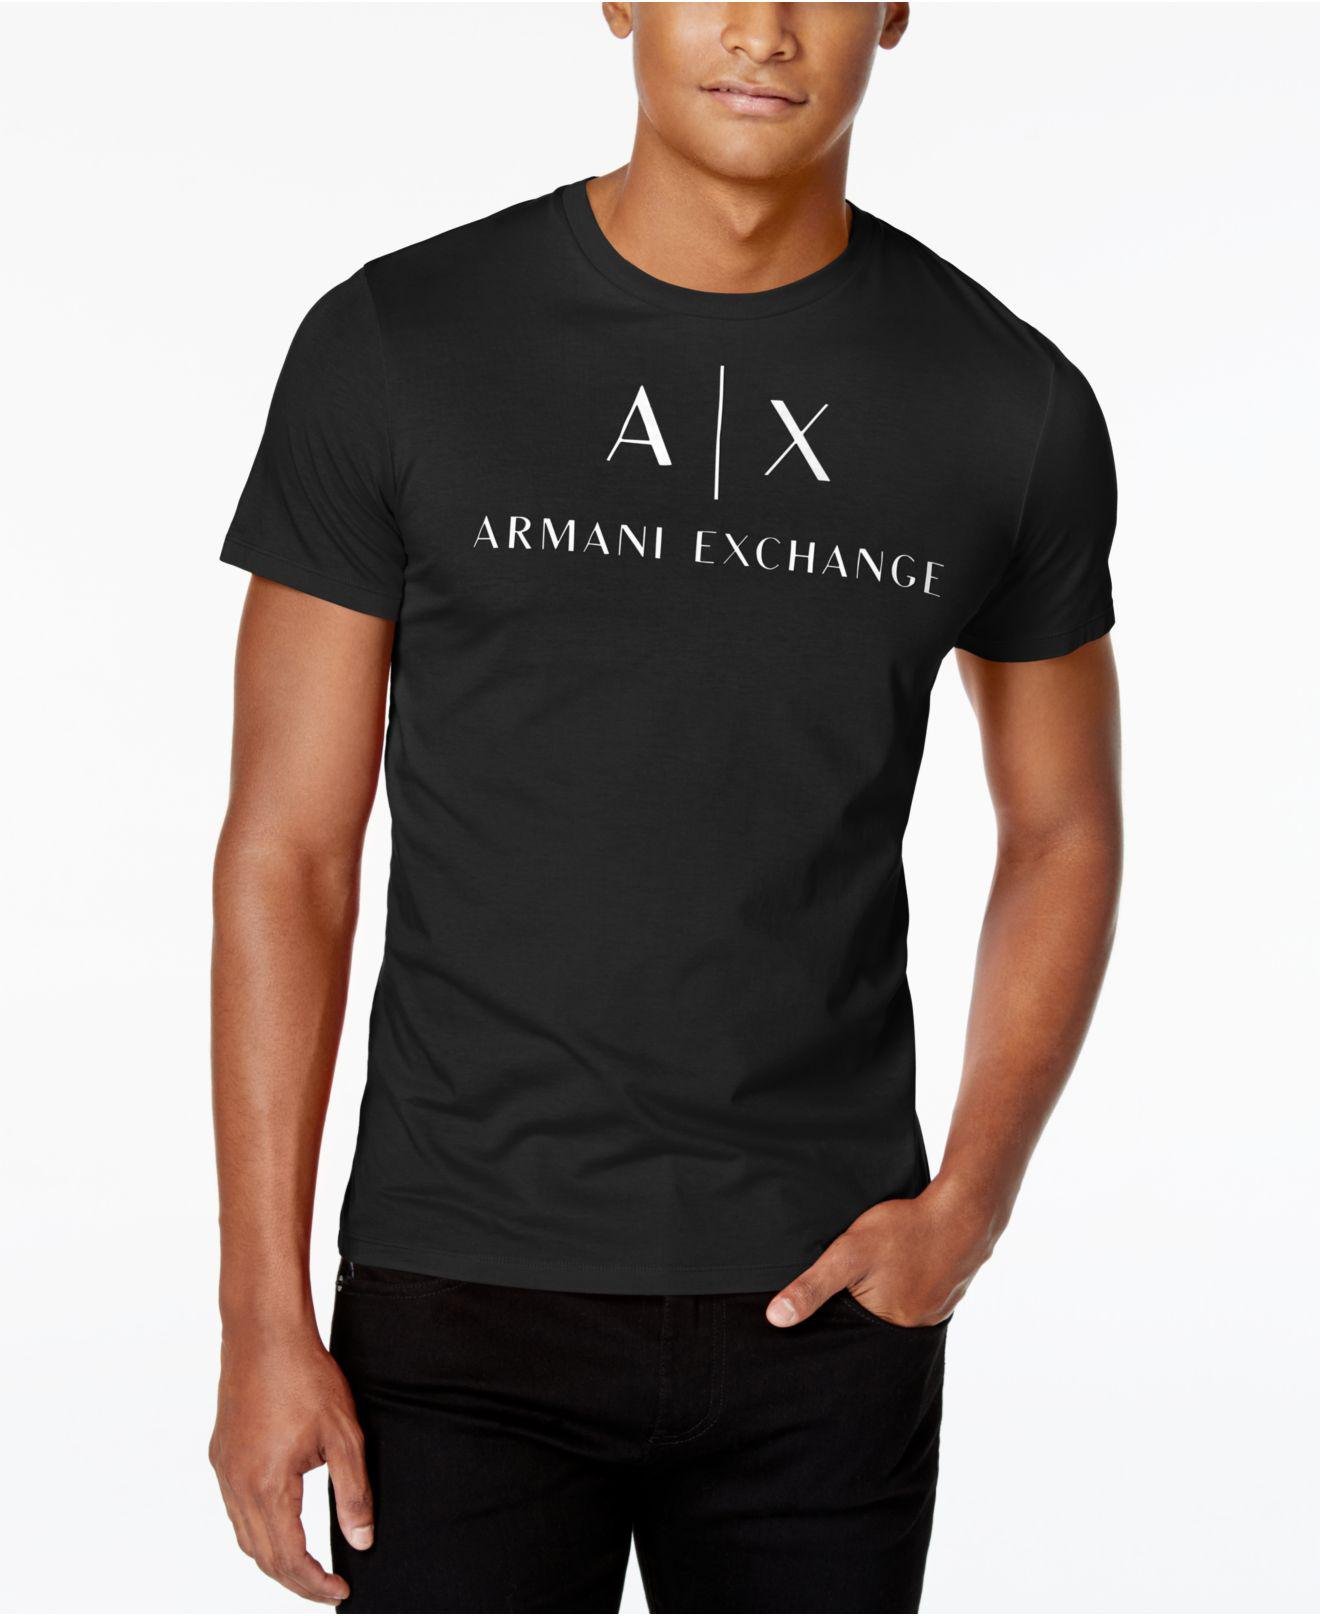 armani exchange t shirts india